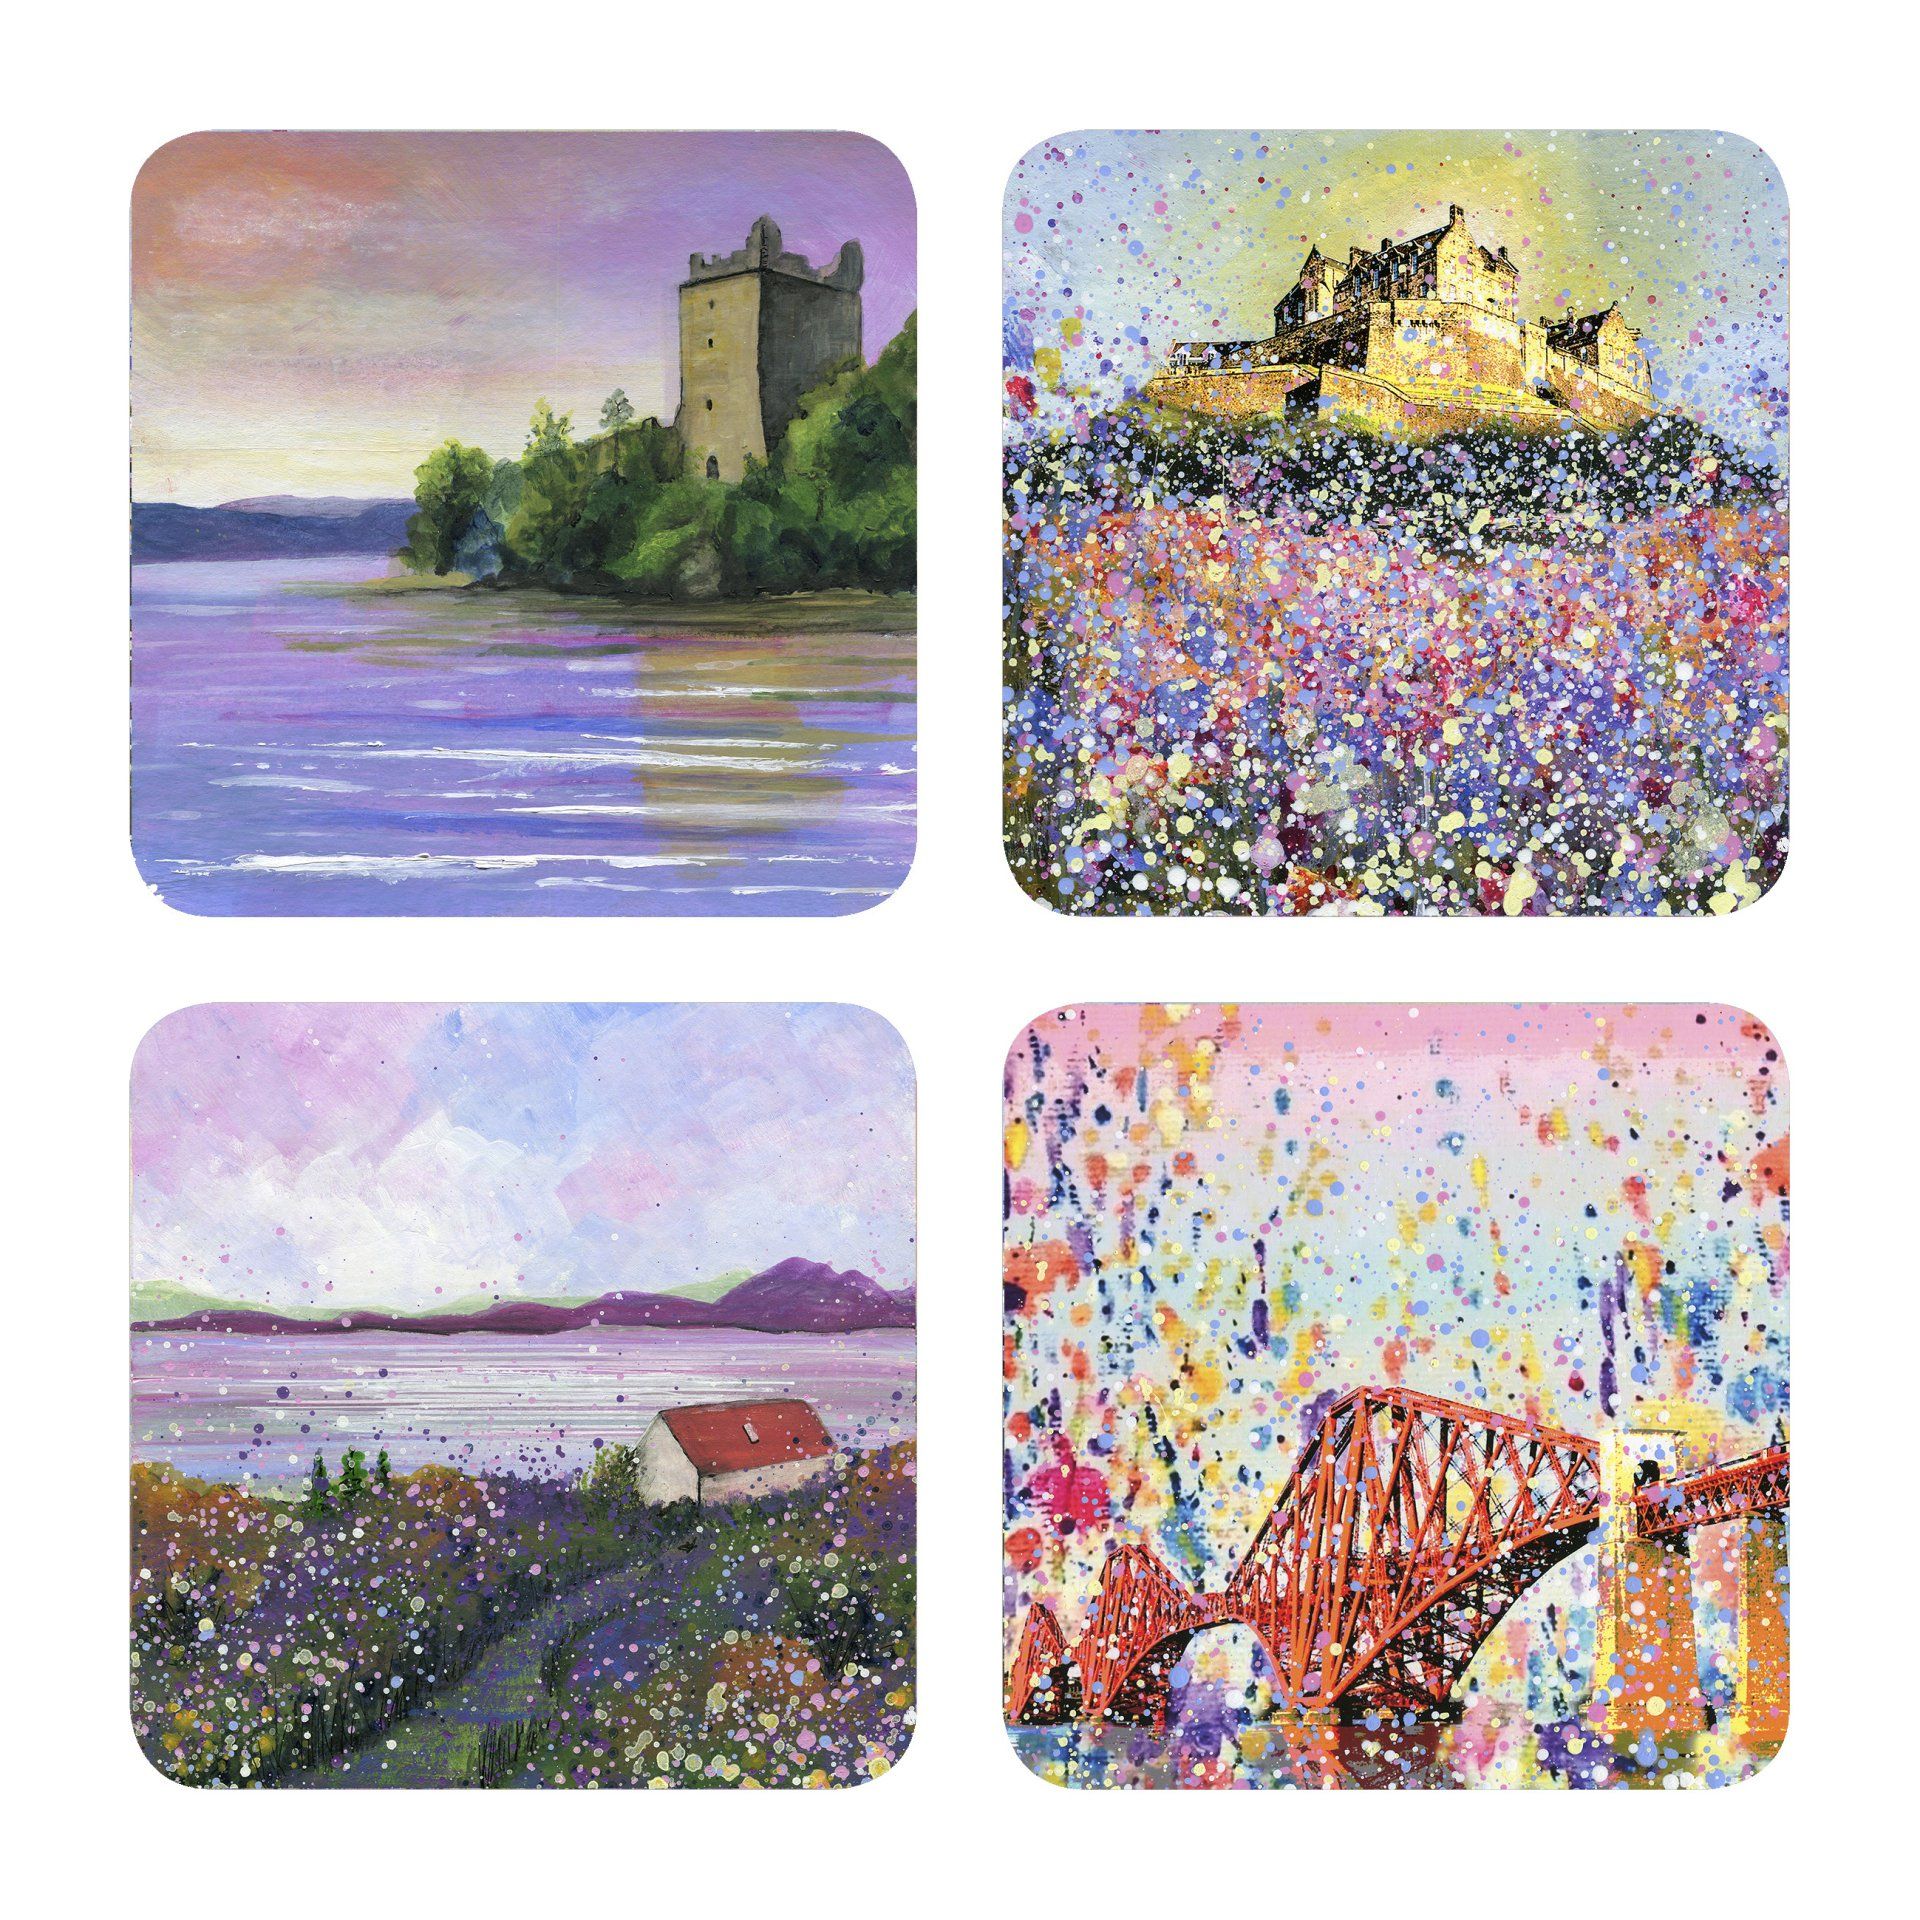 Ben Nevis coaster, Scotland art coasters,  art prints of  Scotland.